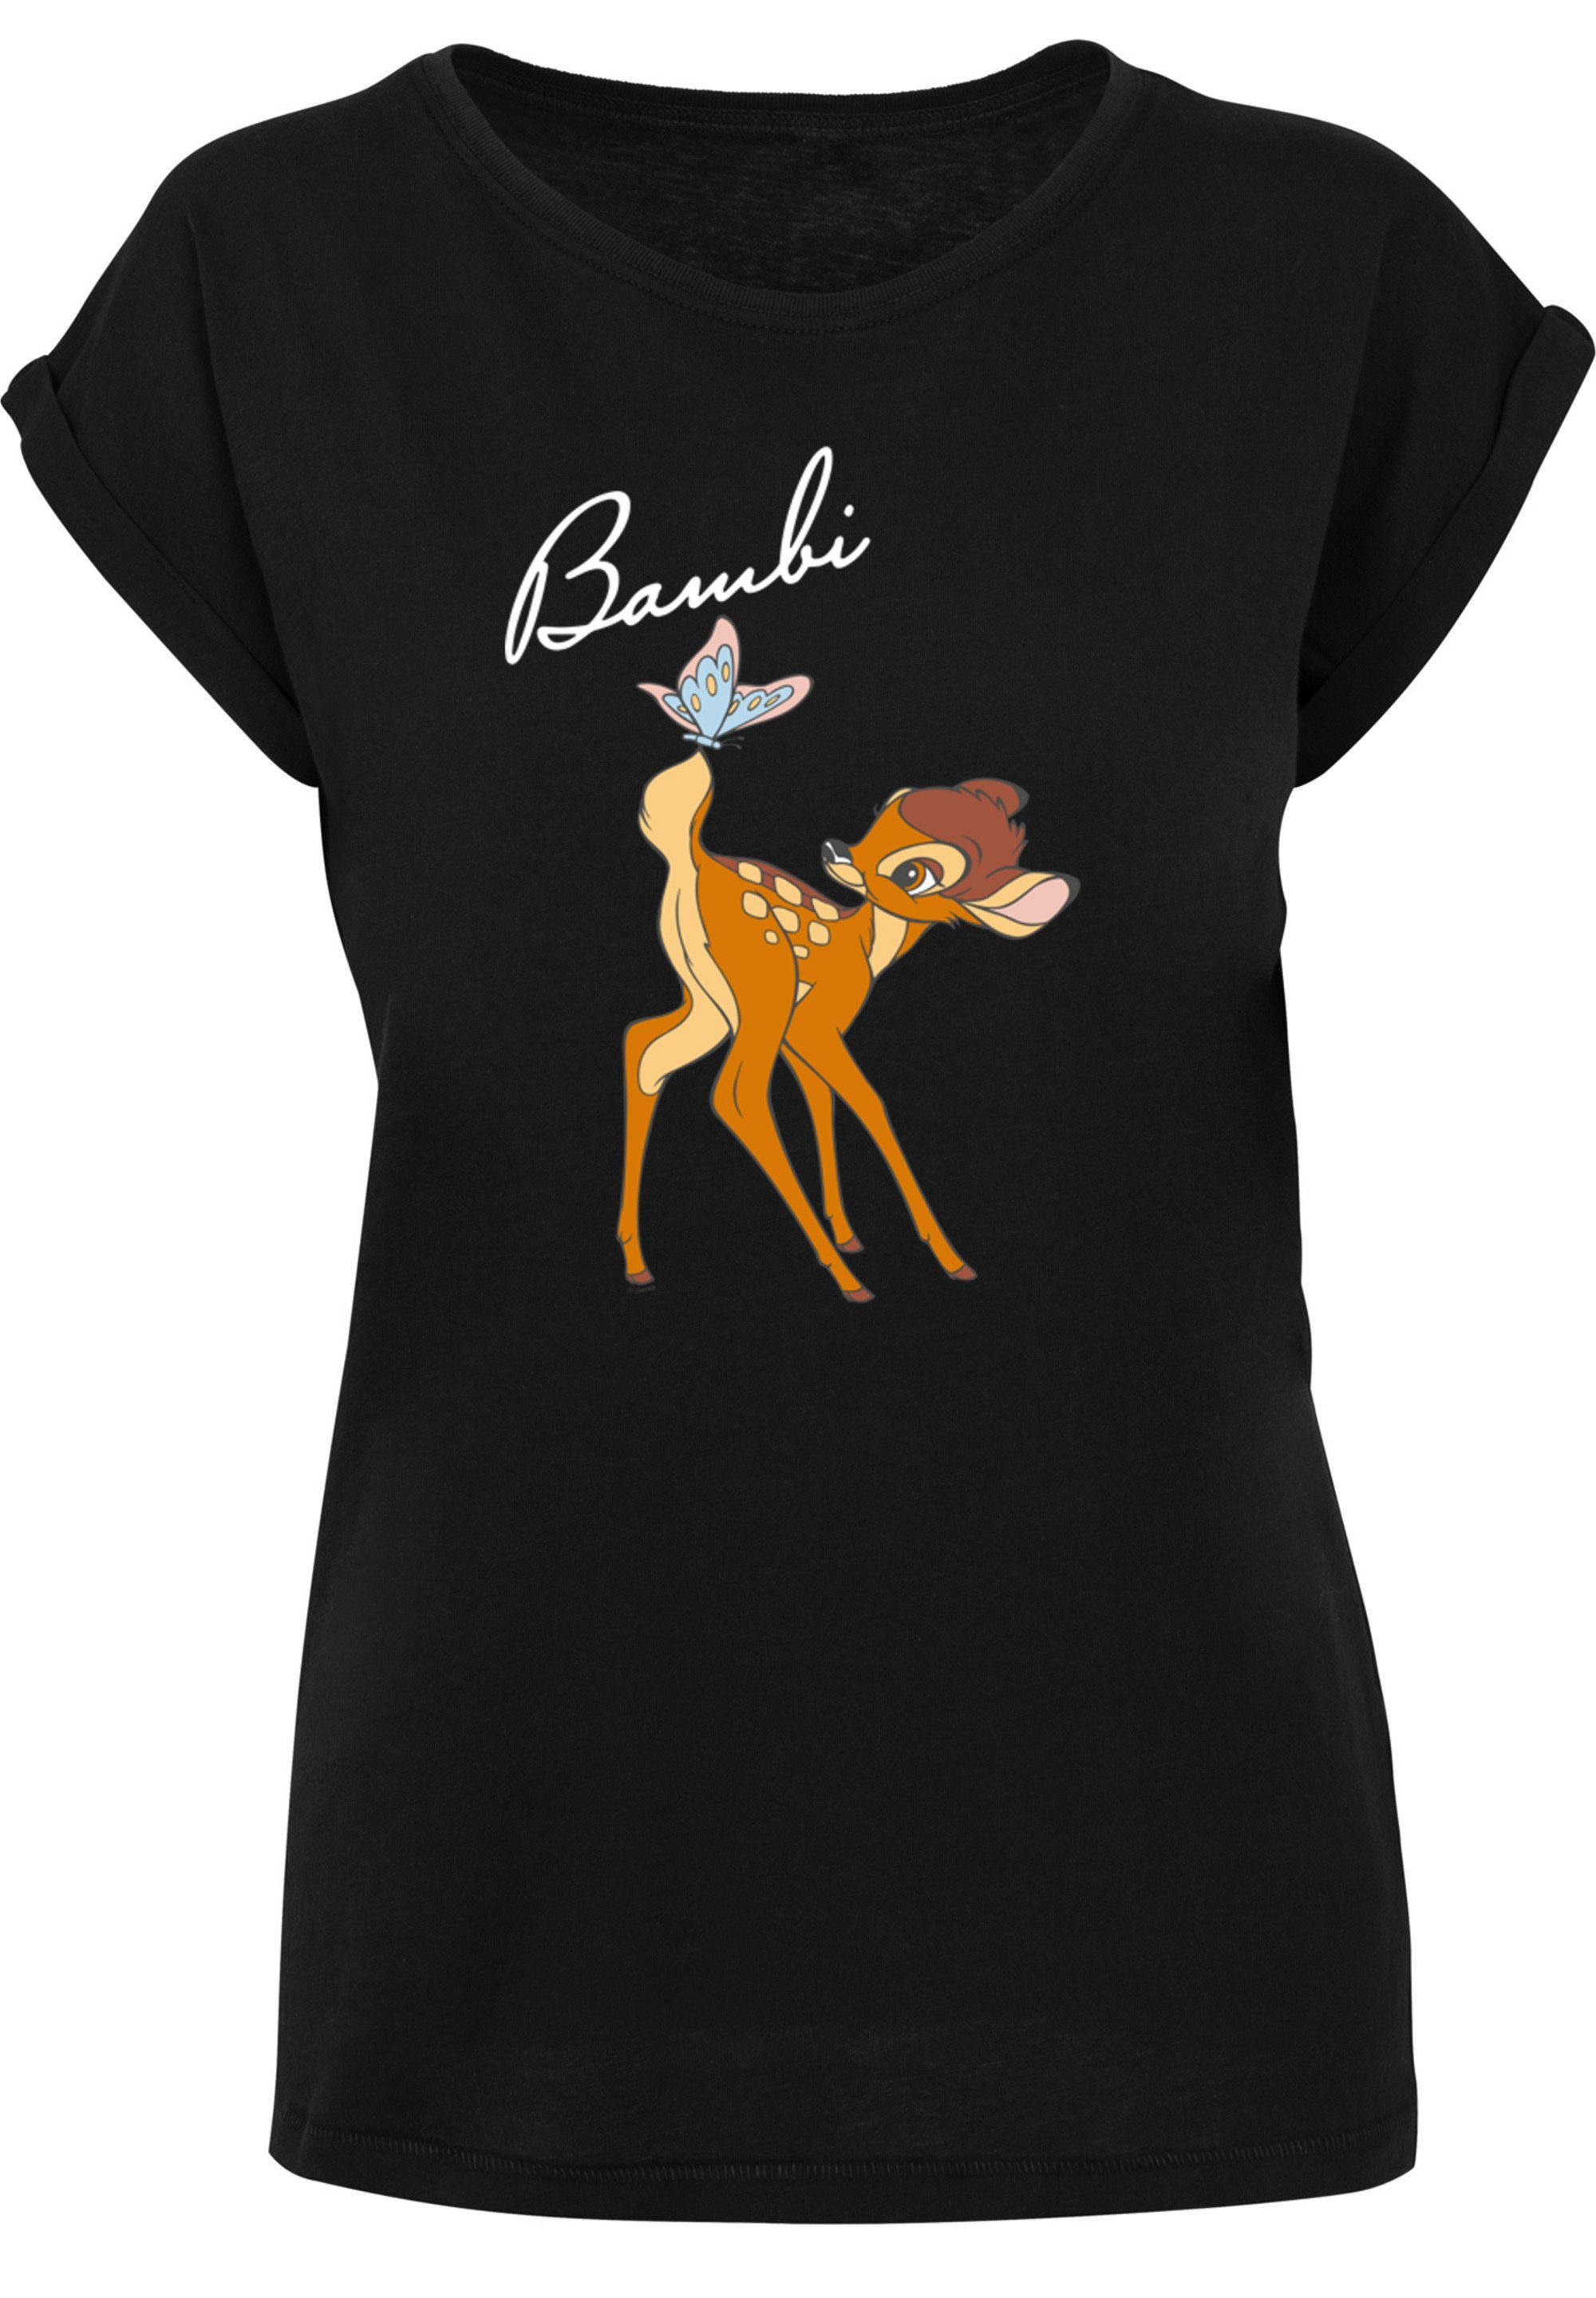 Bambi F4NT4STIC schwarz T-Shirt Schmetterling Print Disney Tail